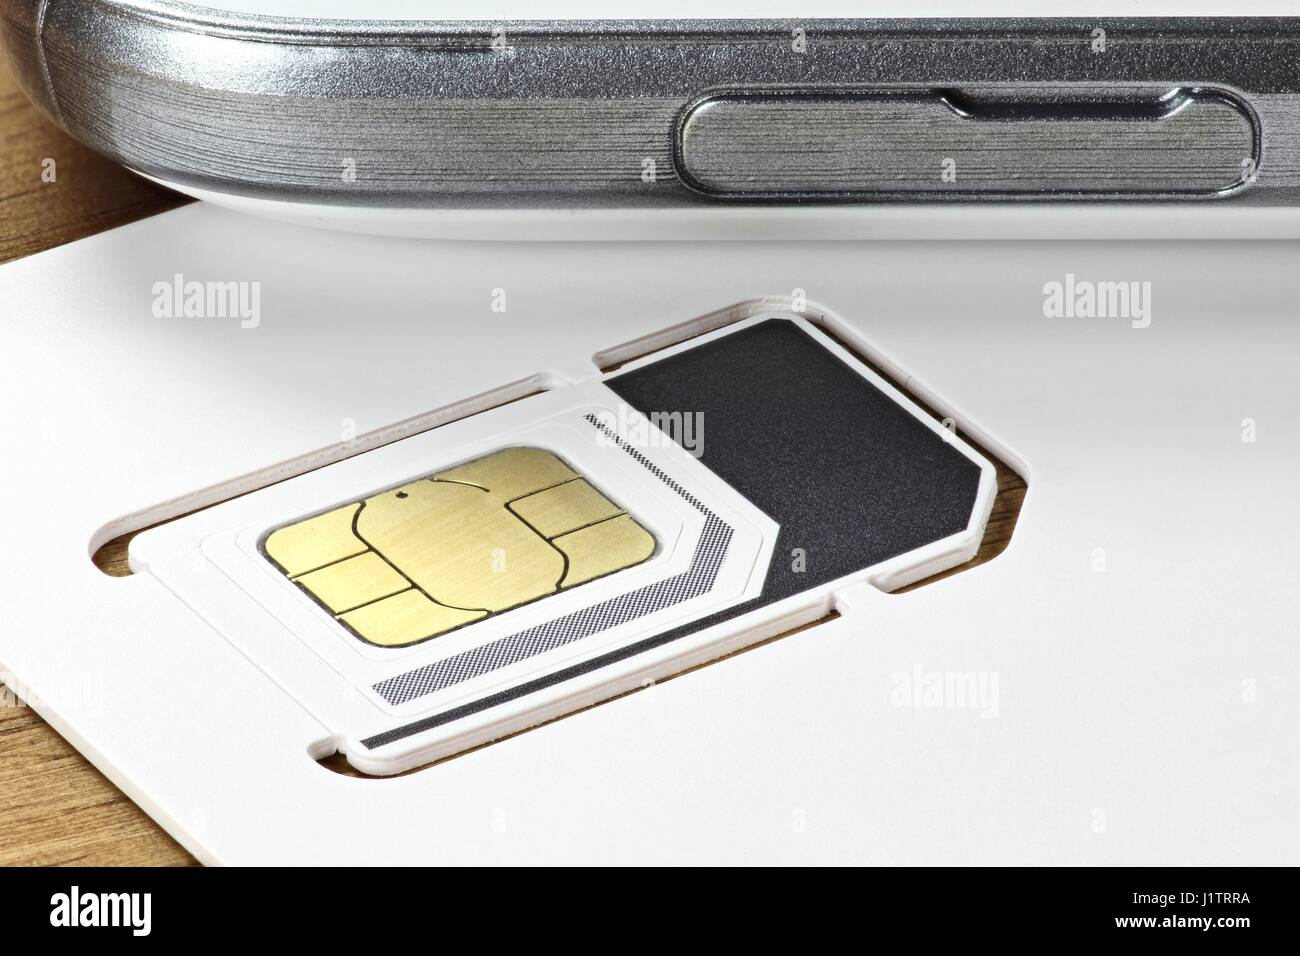 triple SIM card for mobile communication Stock Photo